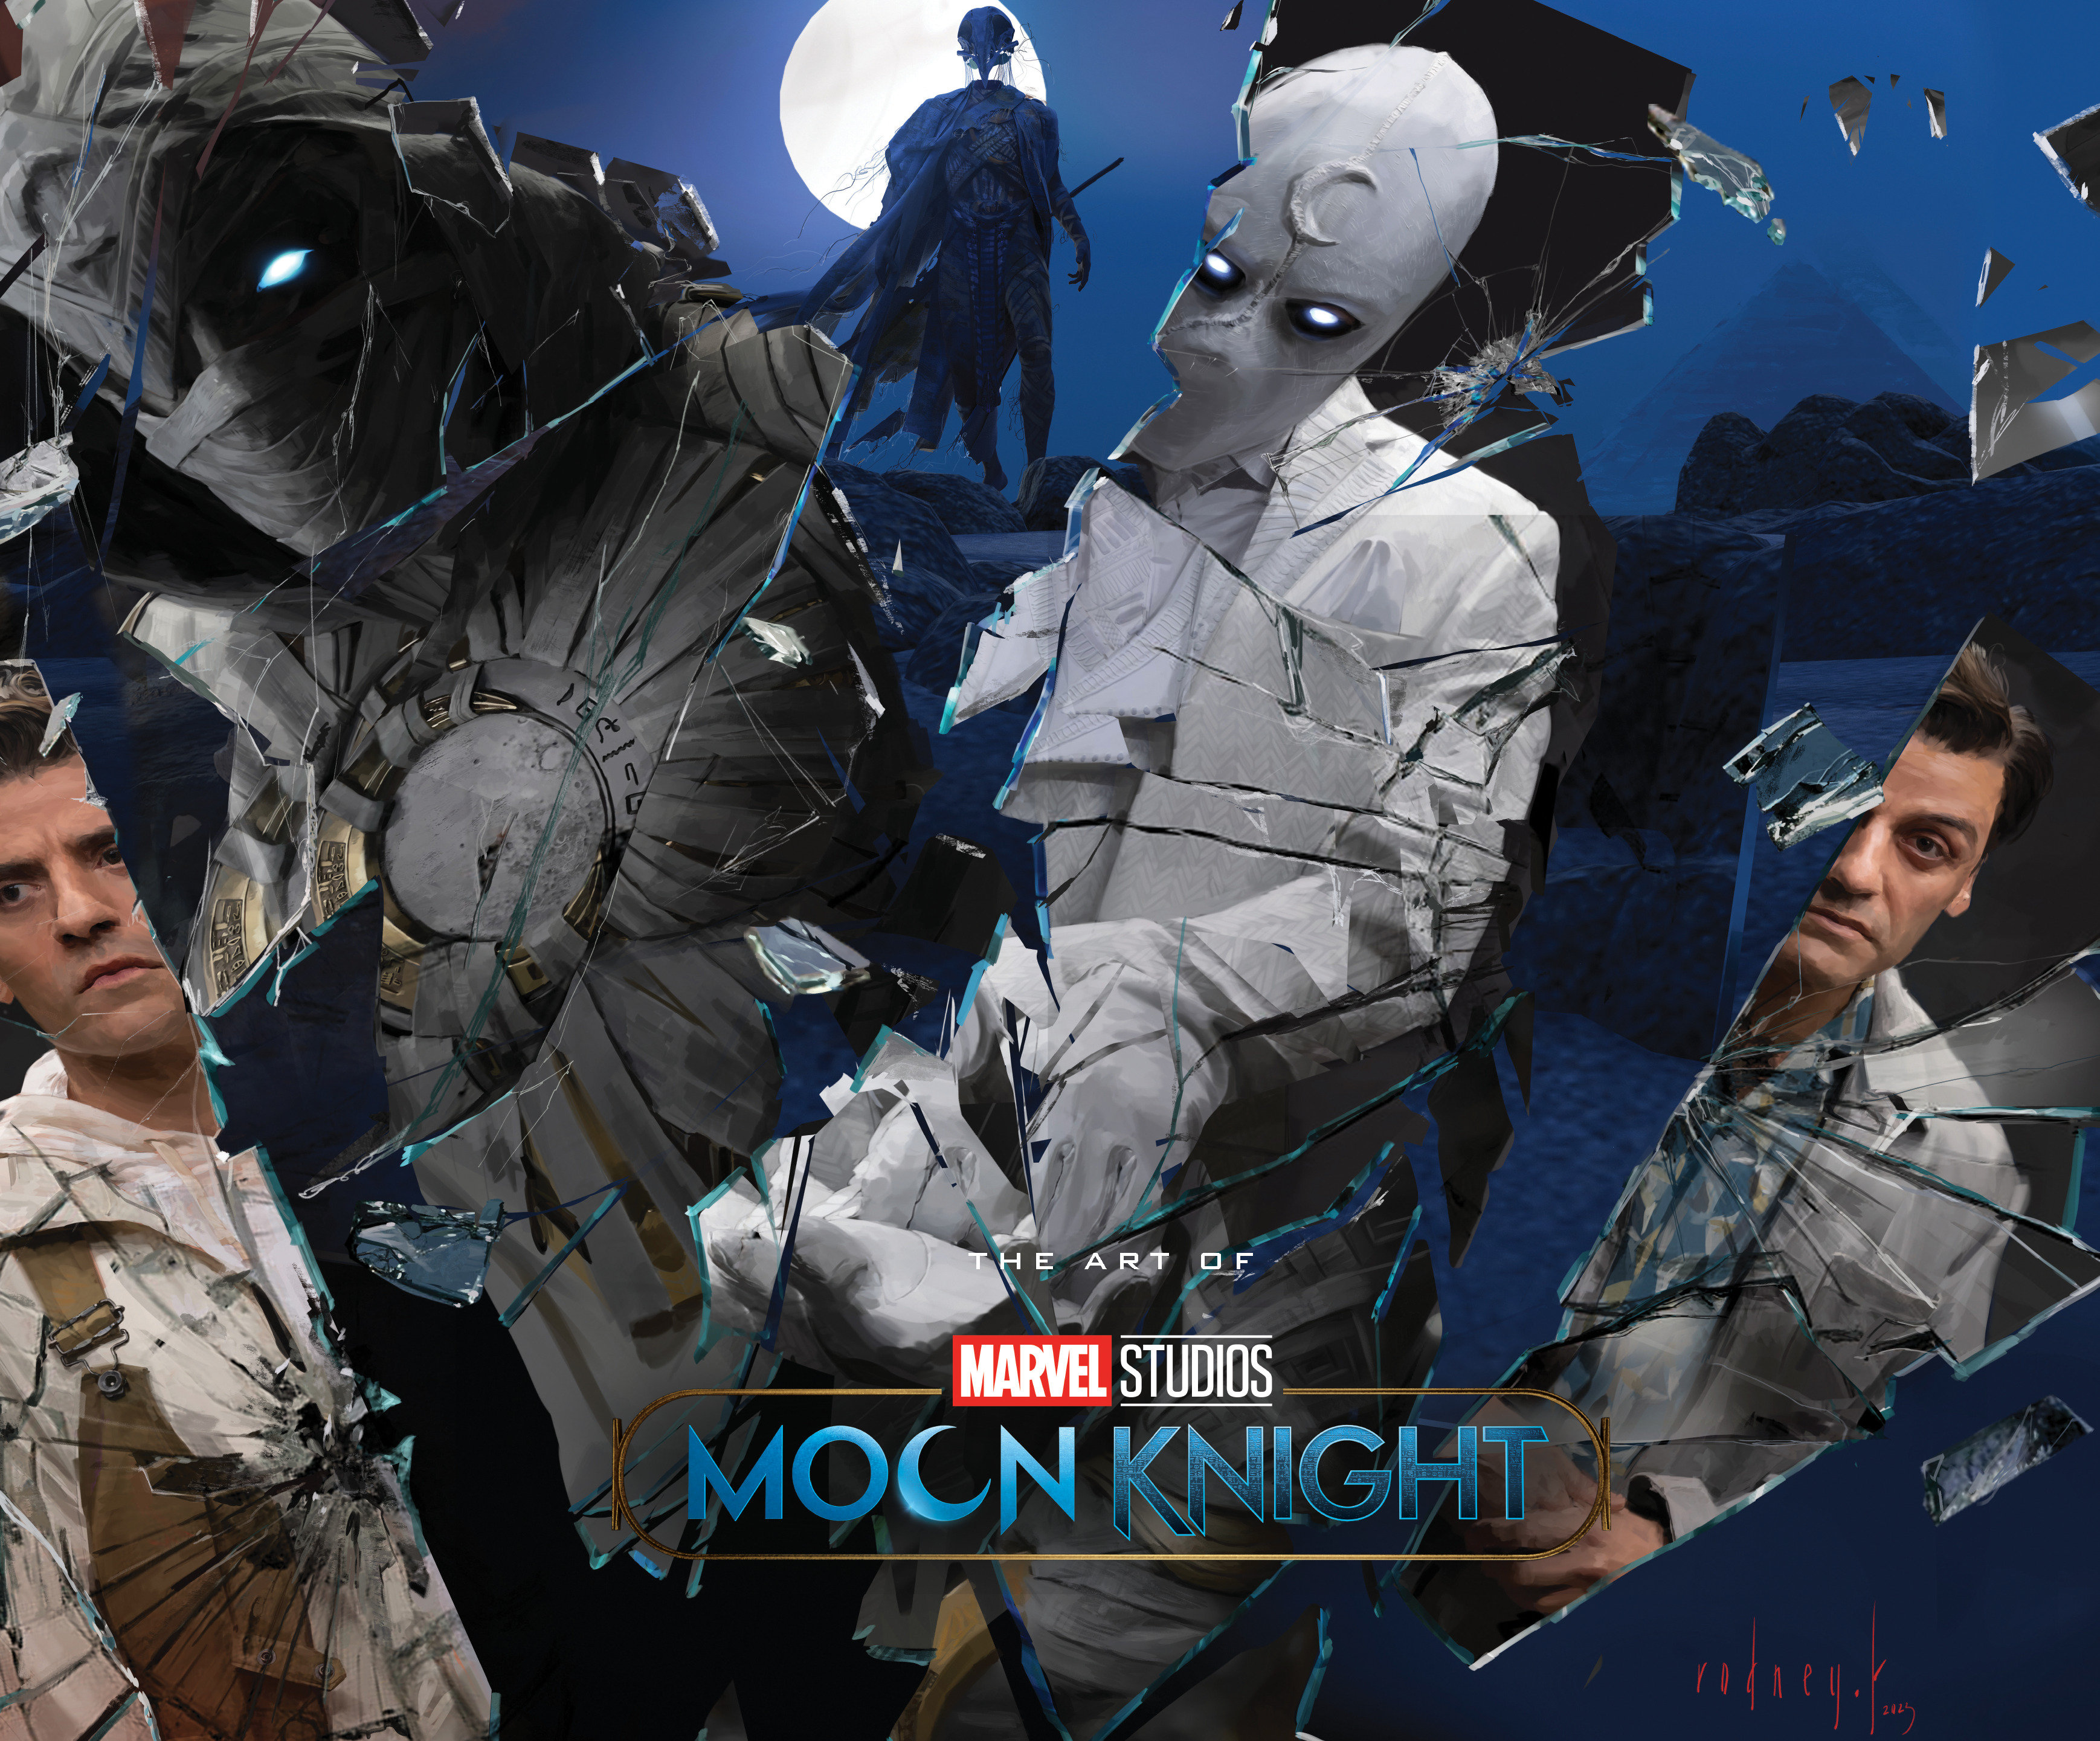 Marvel Studios Moon Knight Hardcover Art of Series